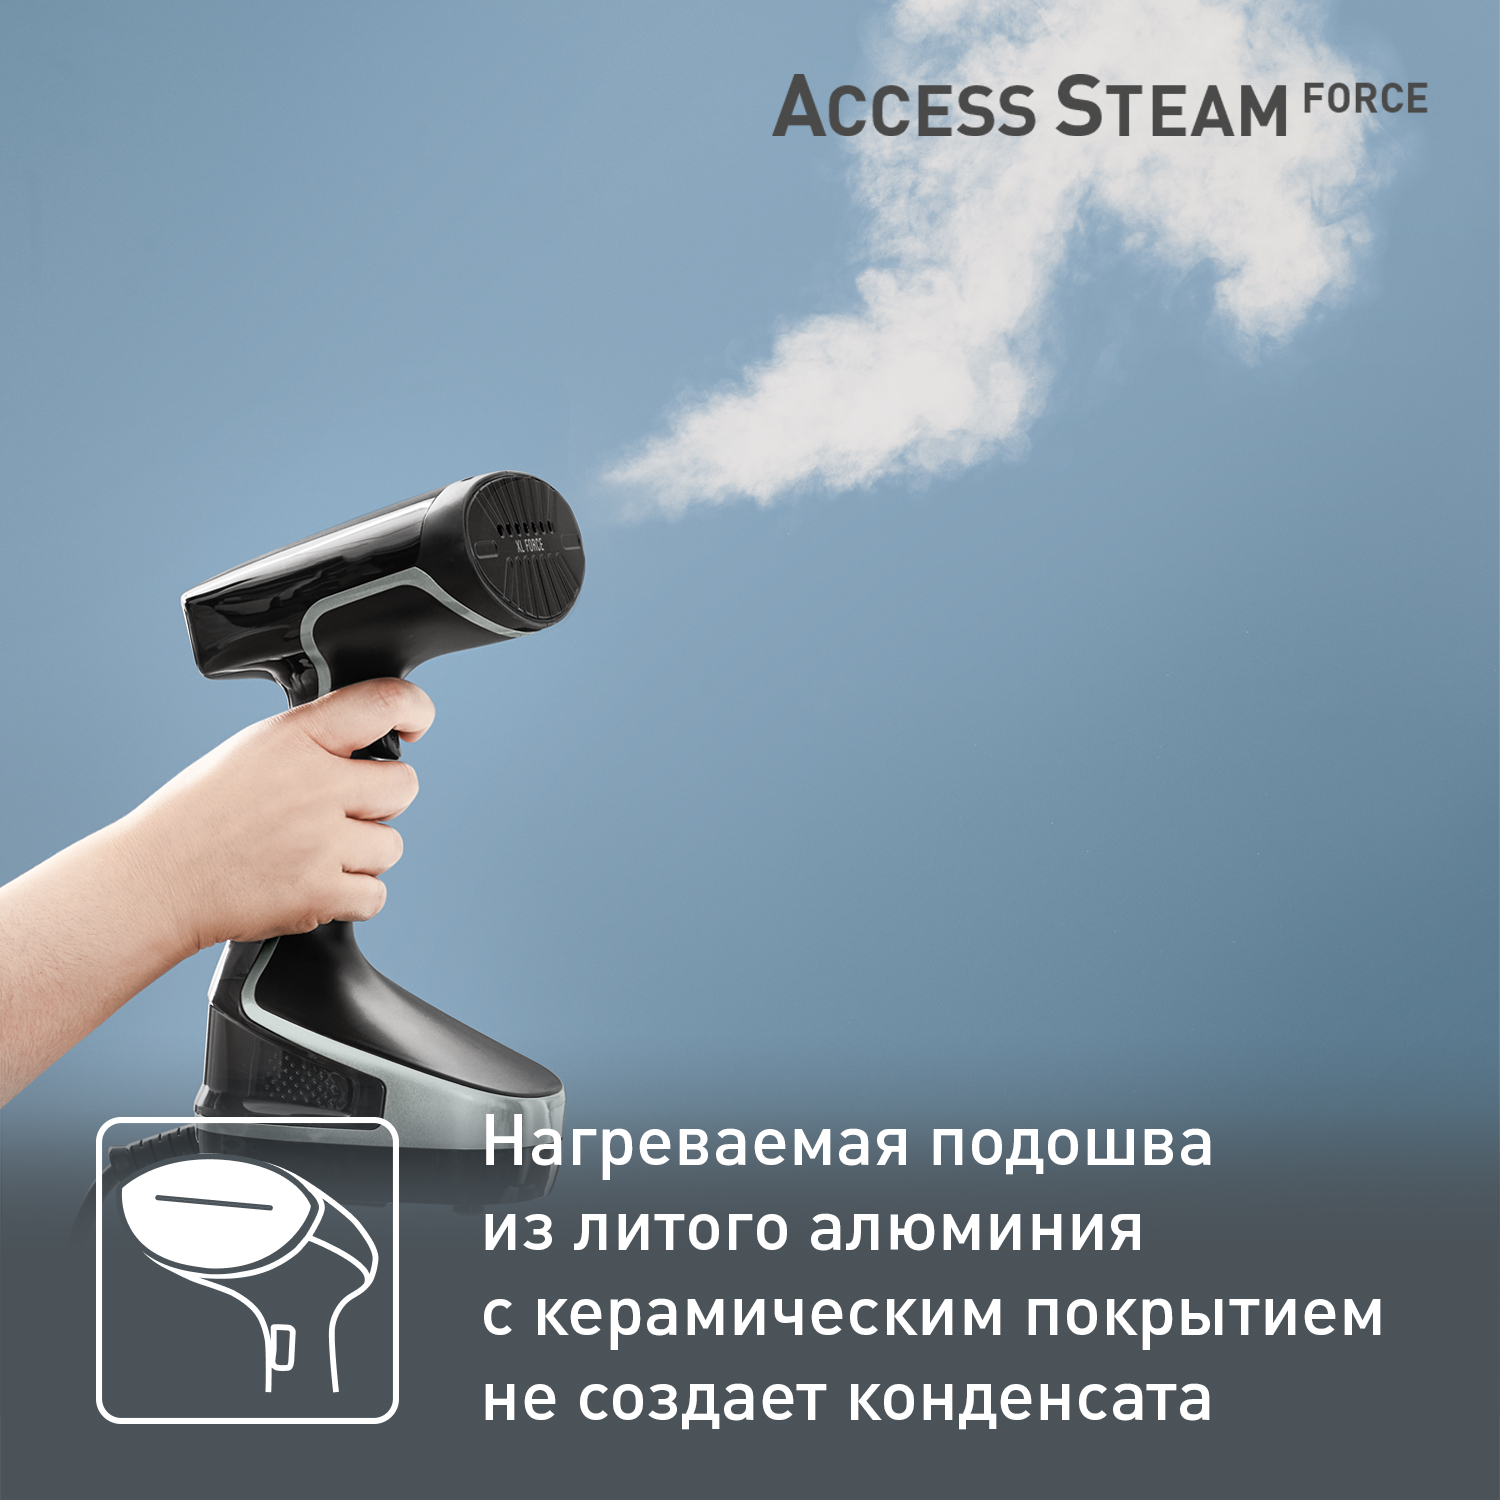 Access steam files фото 62